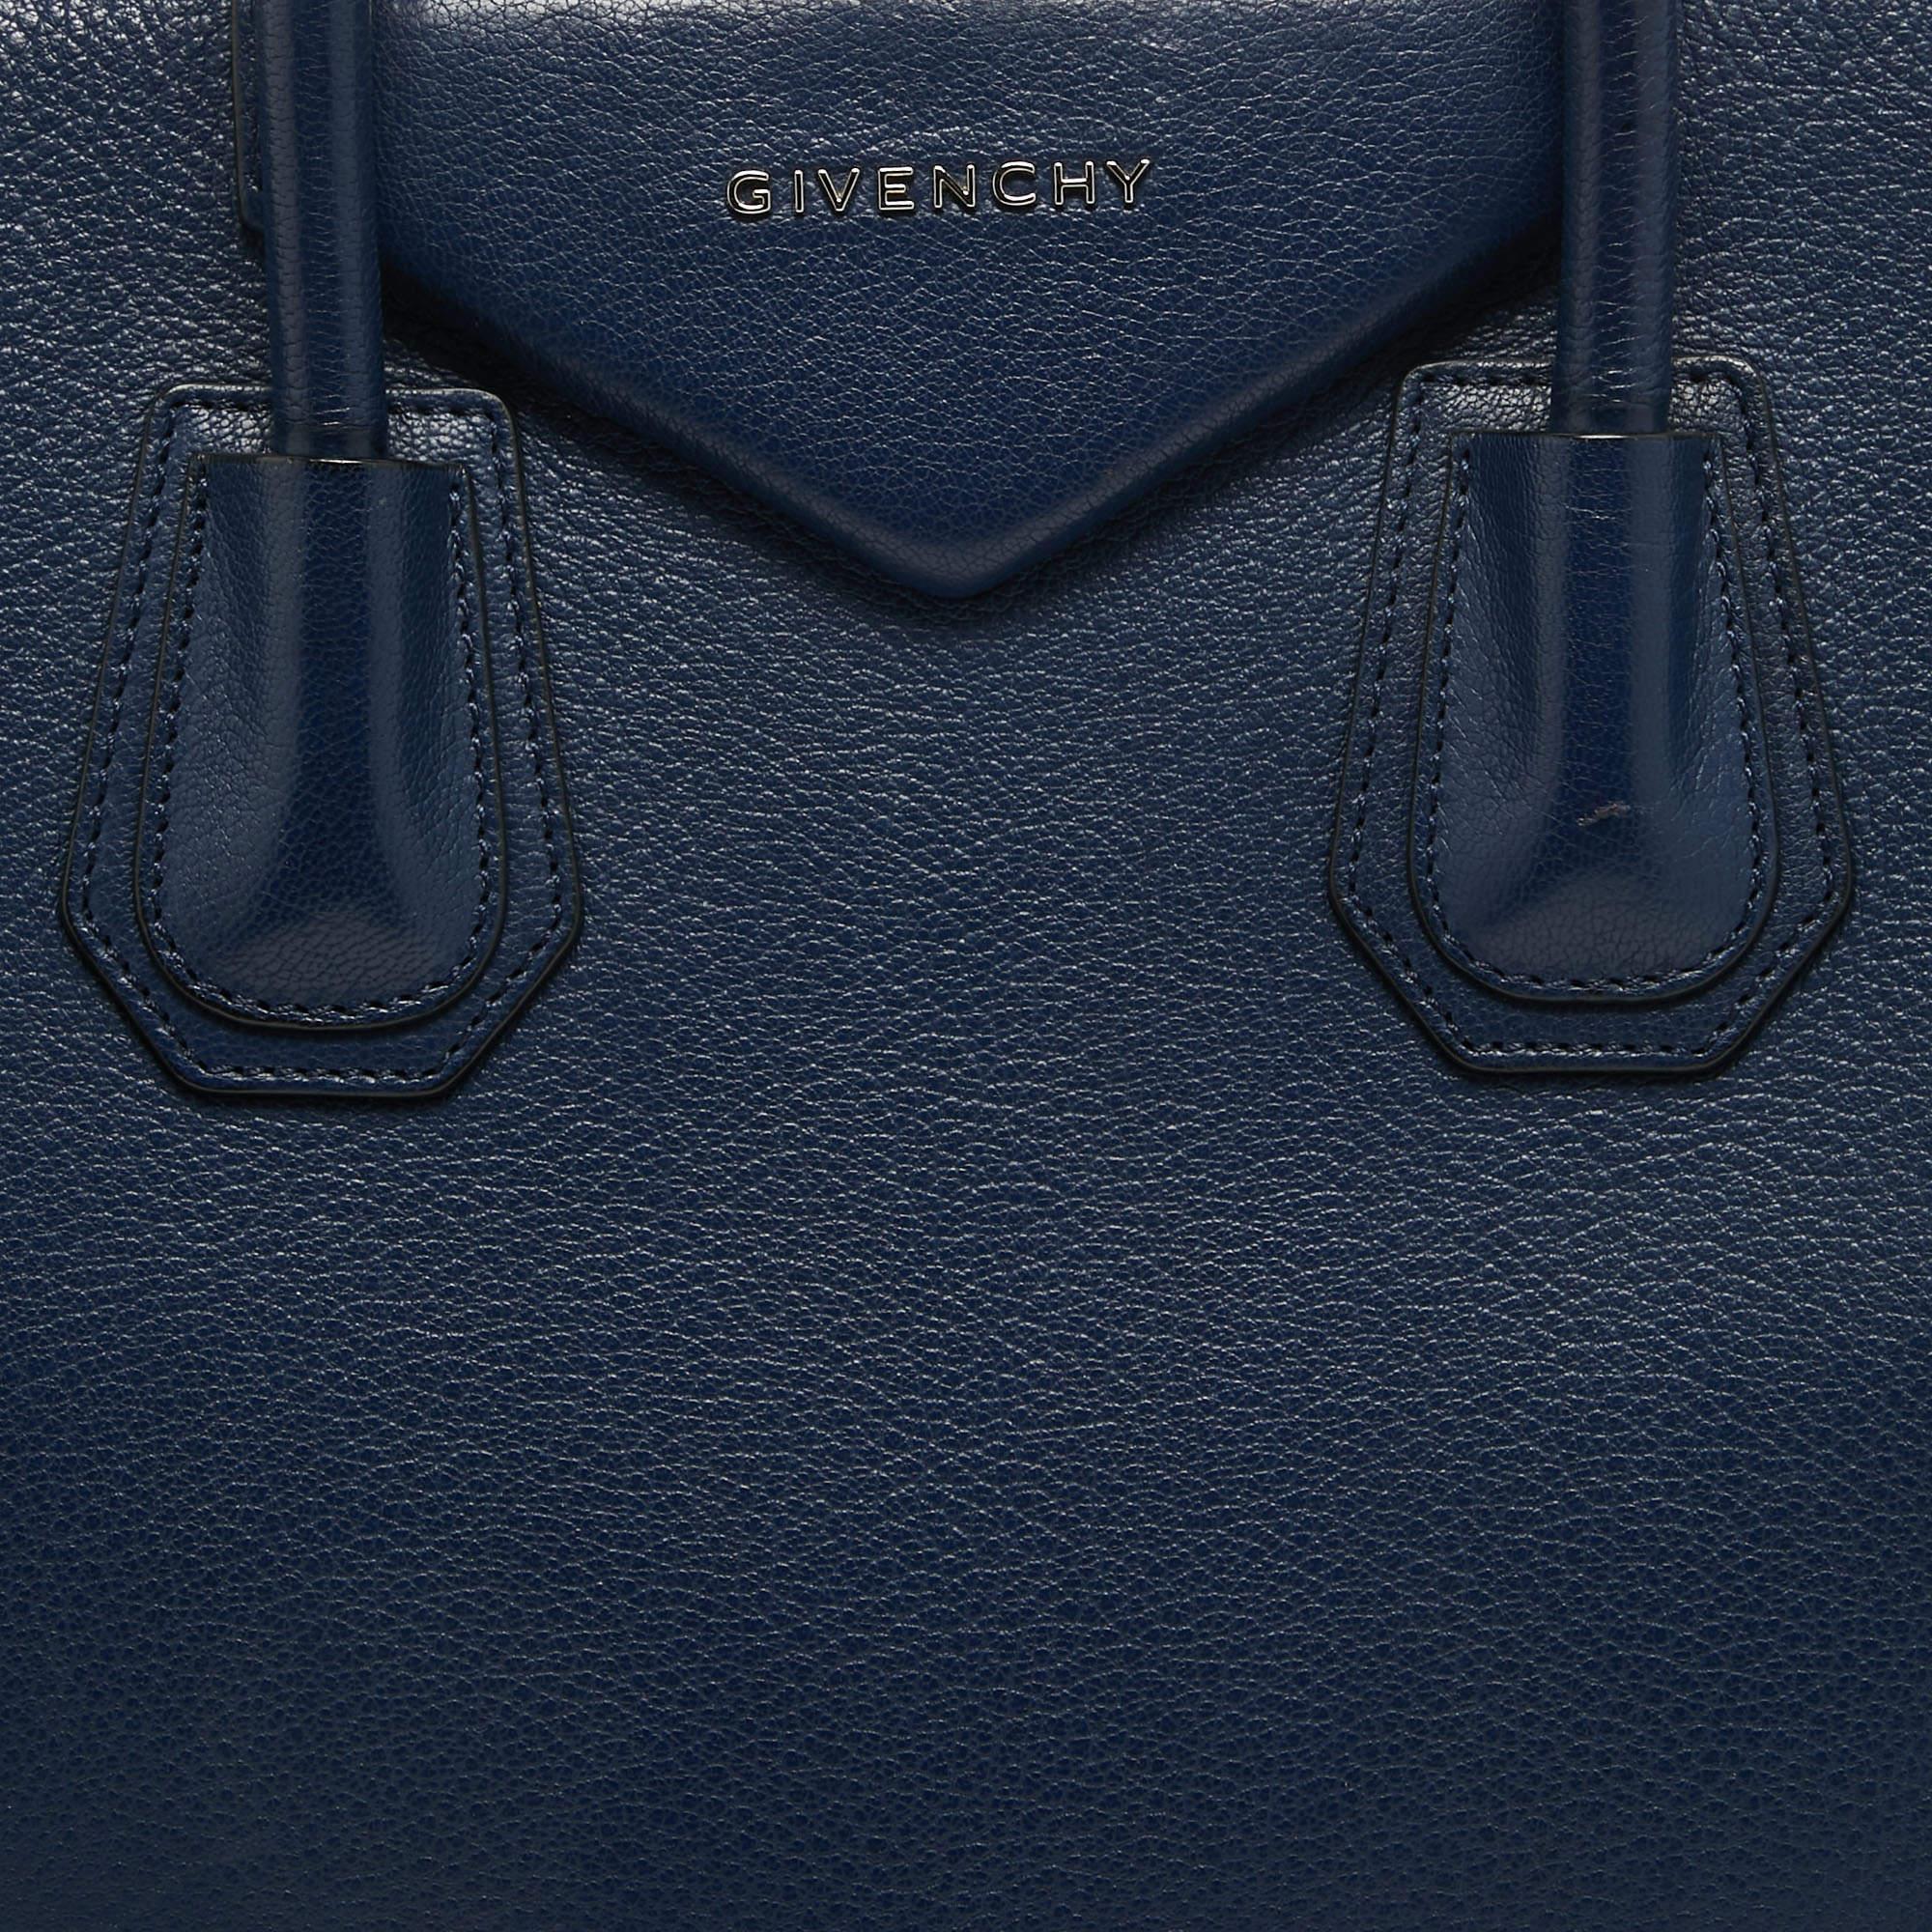 Givenchy Navy Blue Leather Medium Antigona Satchel In Good Condition For Sale In Dubai, Al Qouz 2